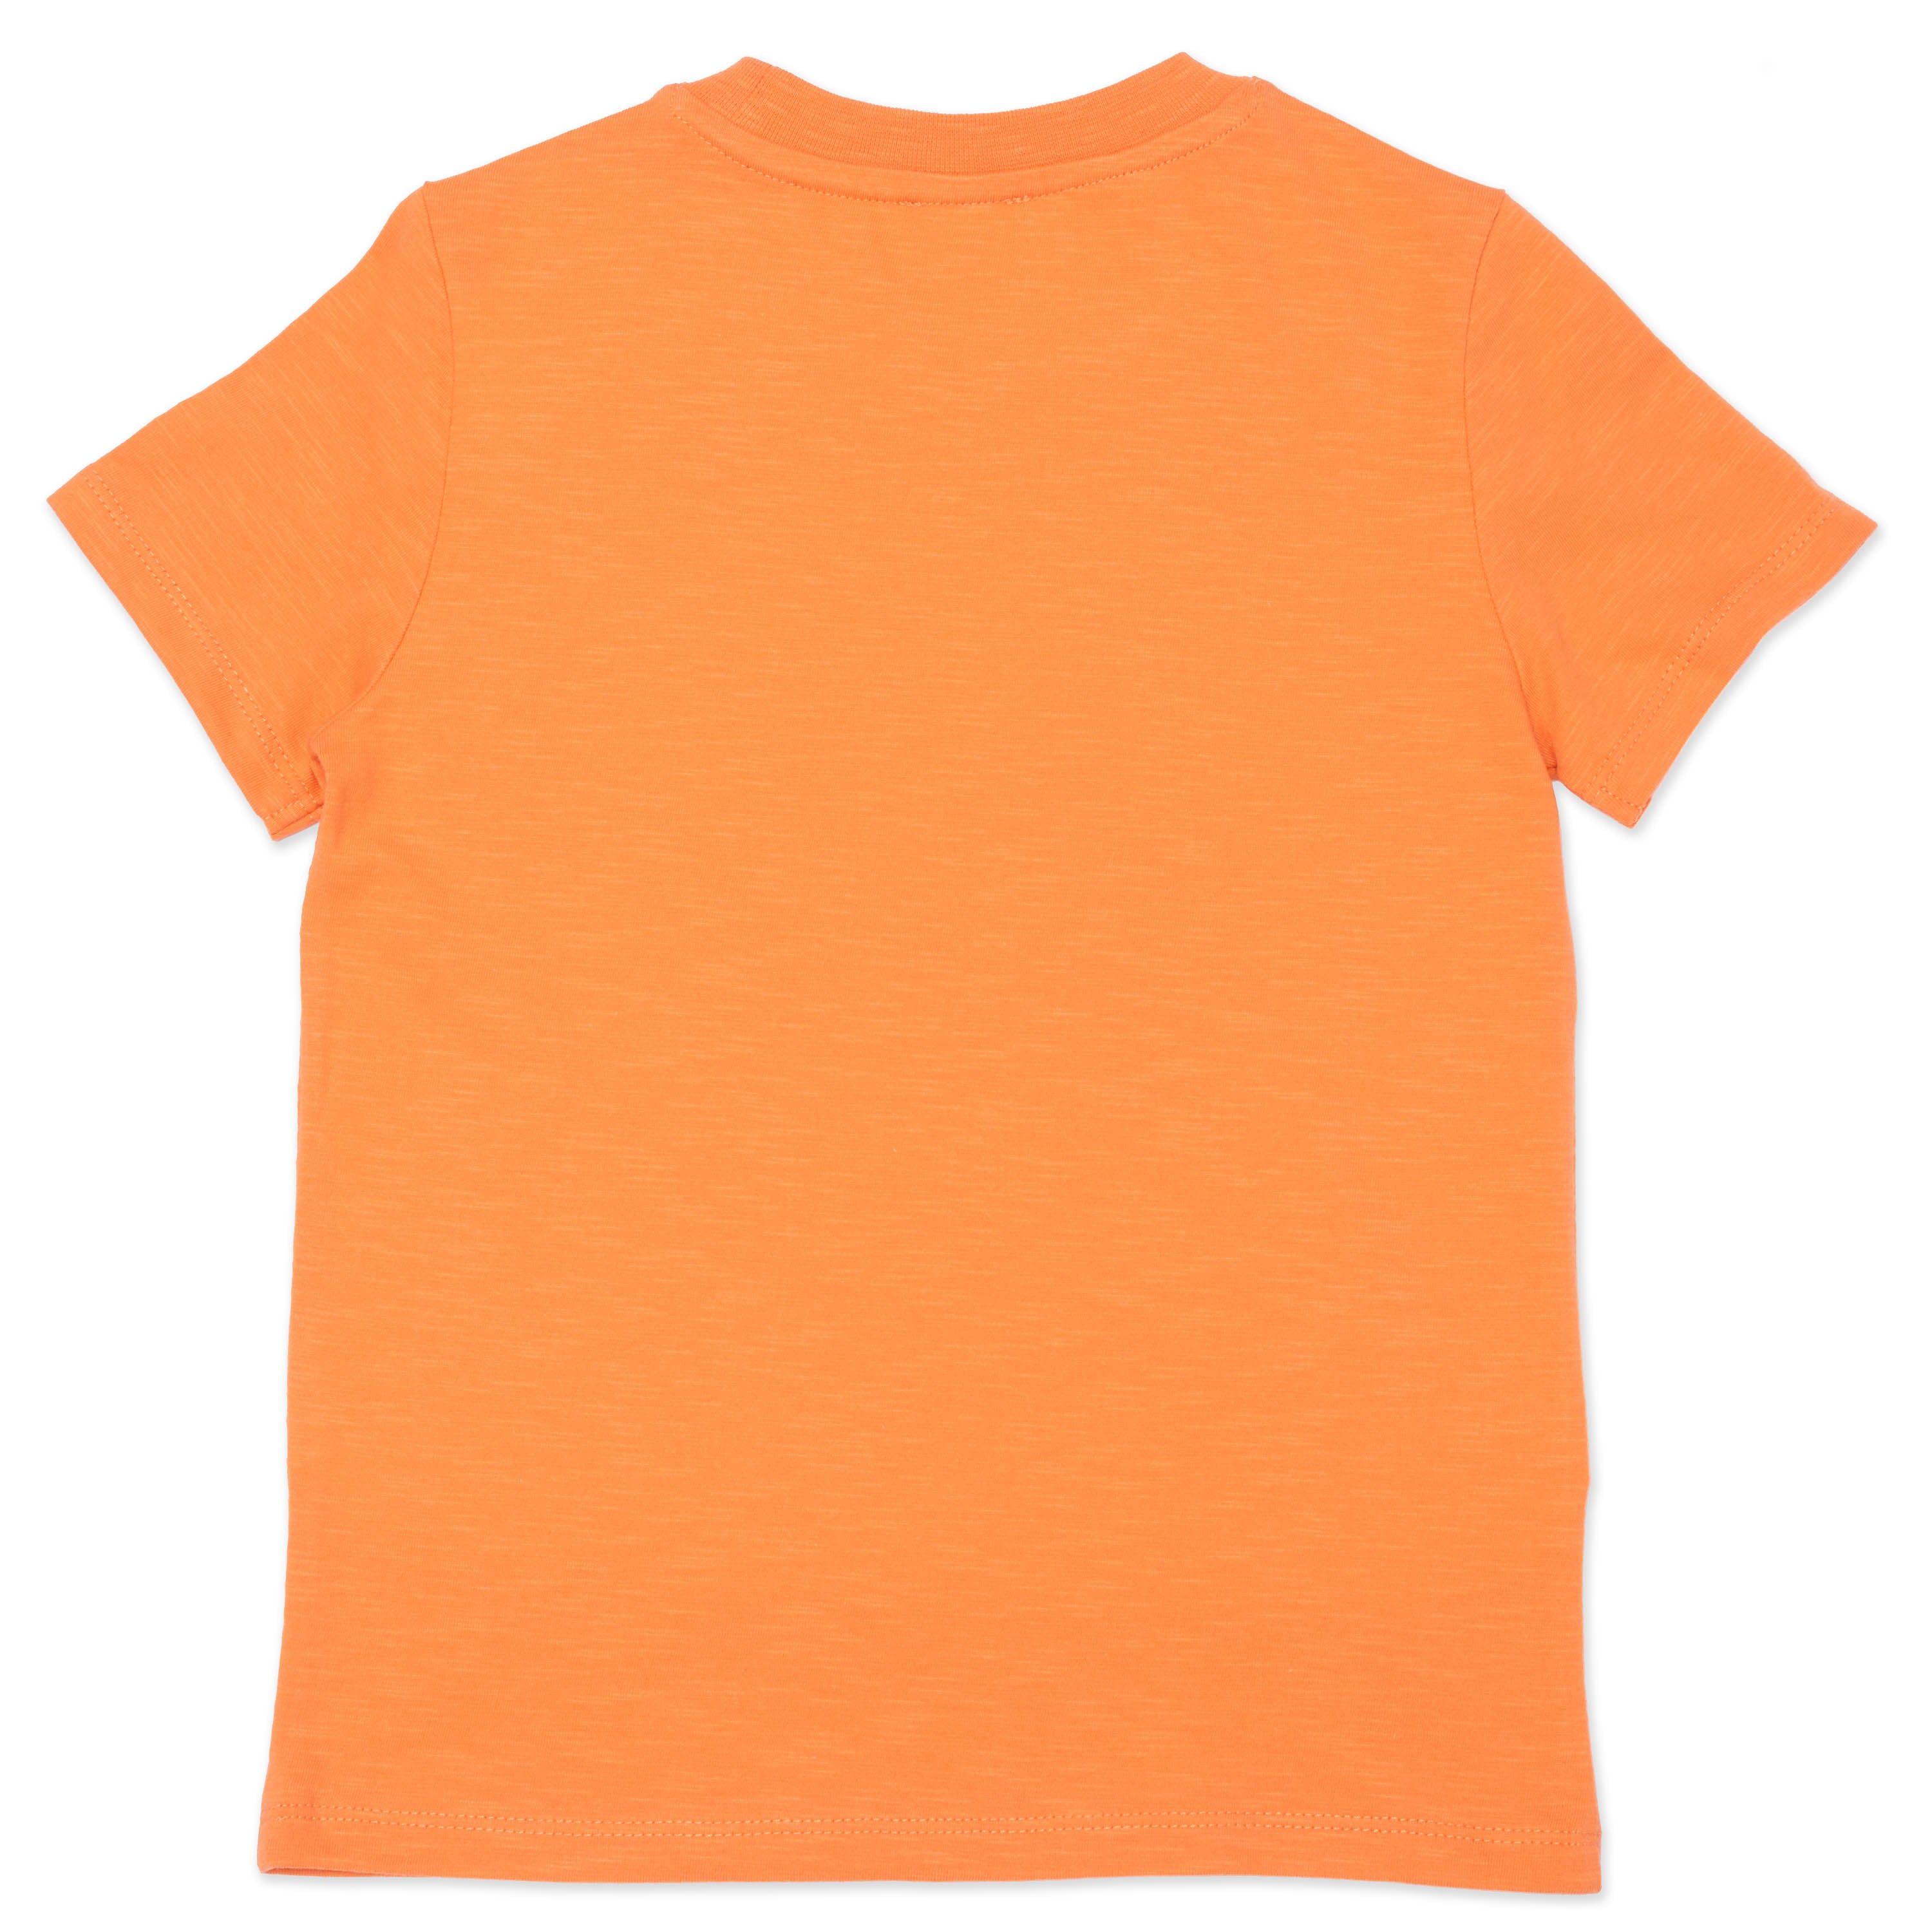 Boys Orange Elephant Cotton T-Shirt